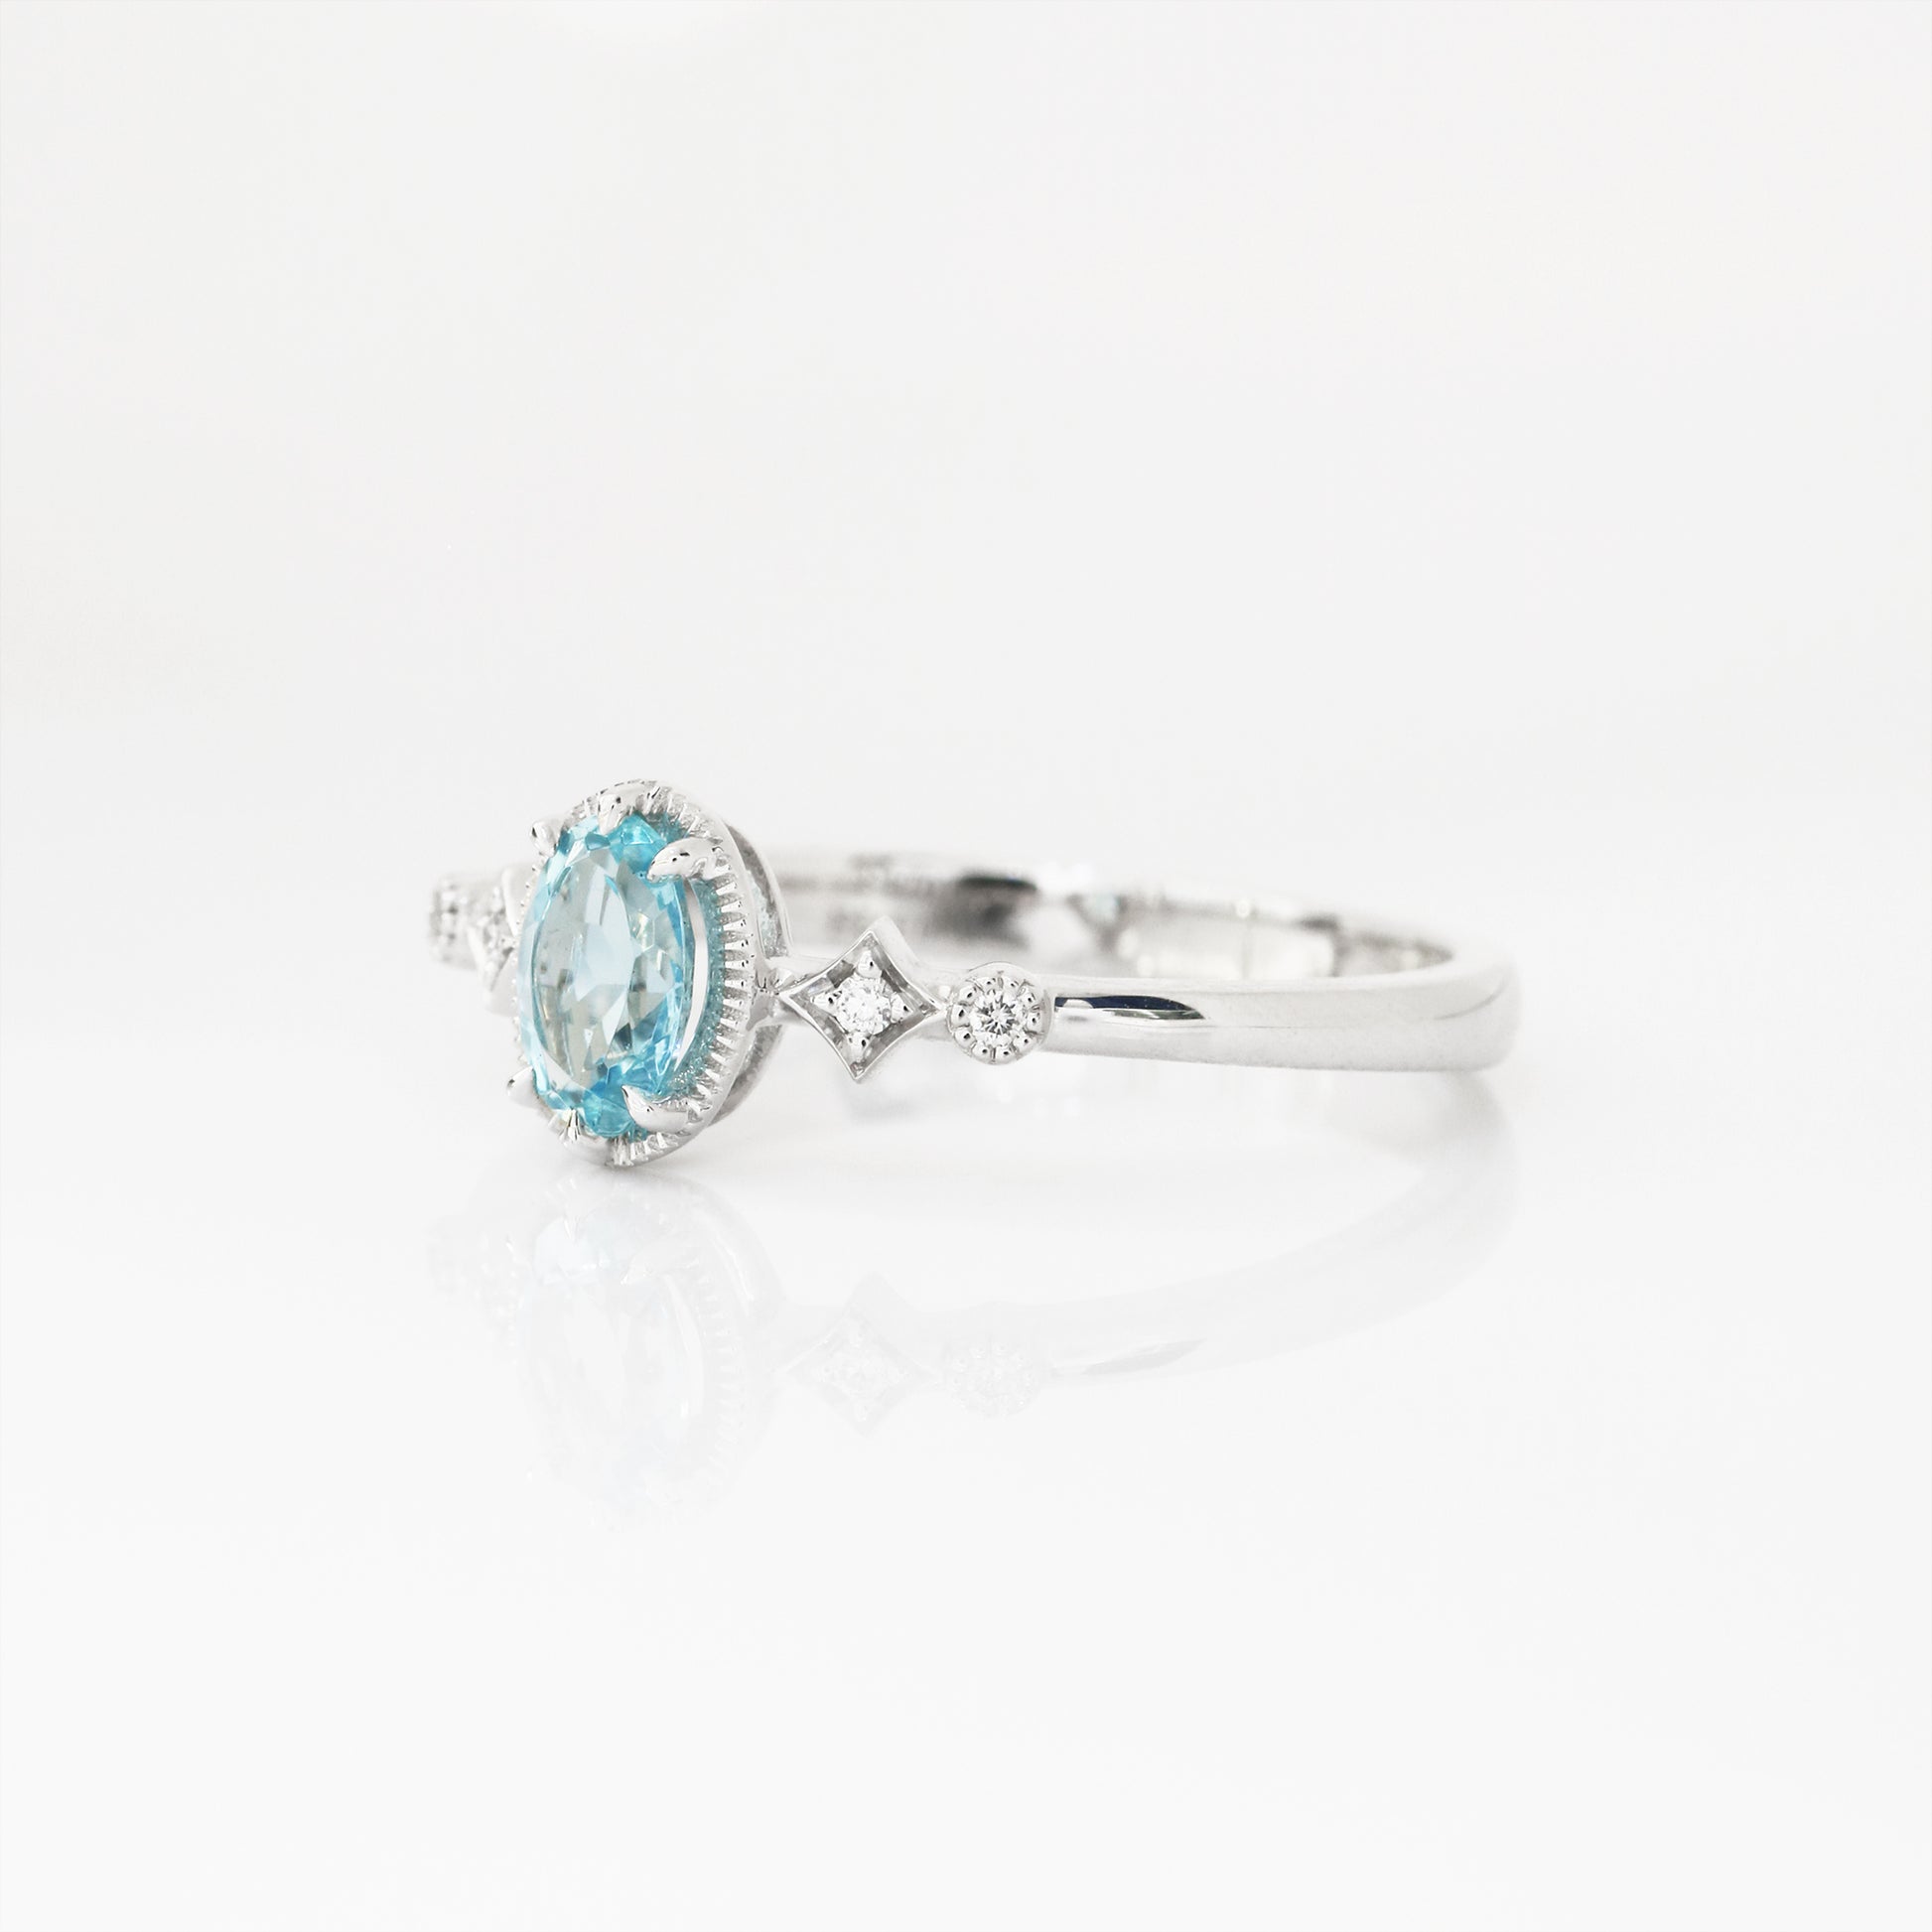 18k白金復古海藍寶石鑽石戒指側面 18k White Gold Vintage Aquamarine Diamond Ring on side view